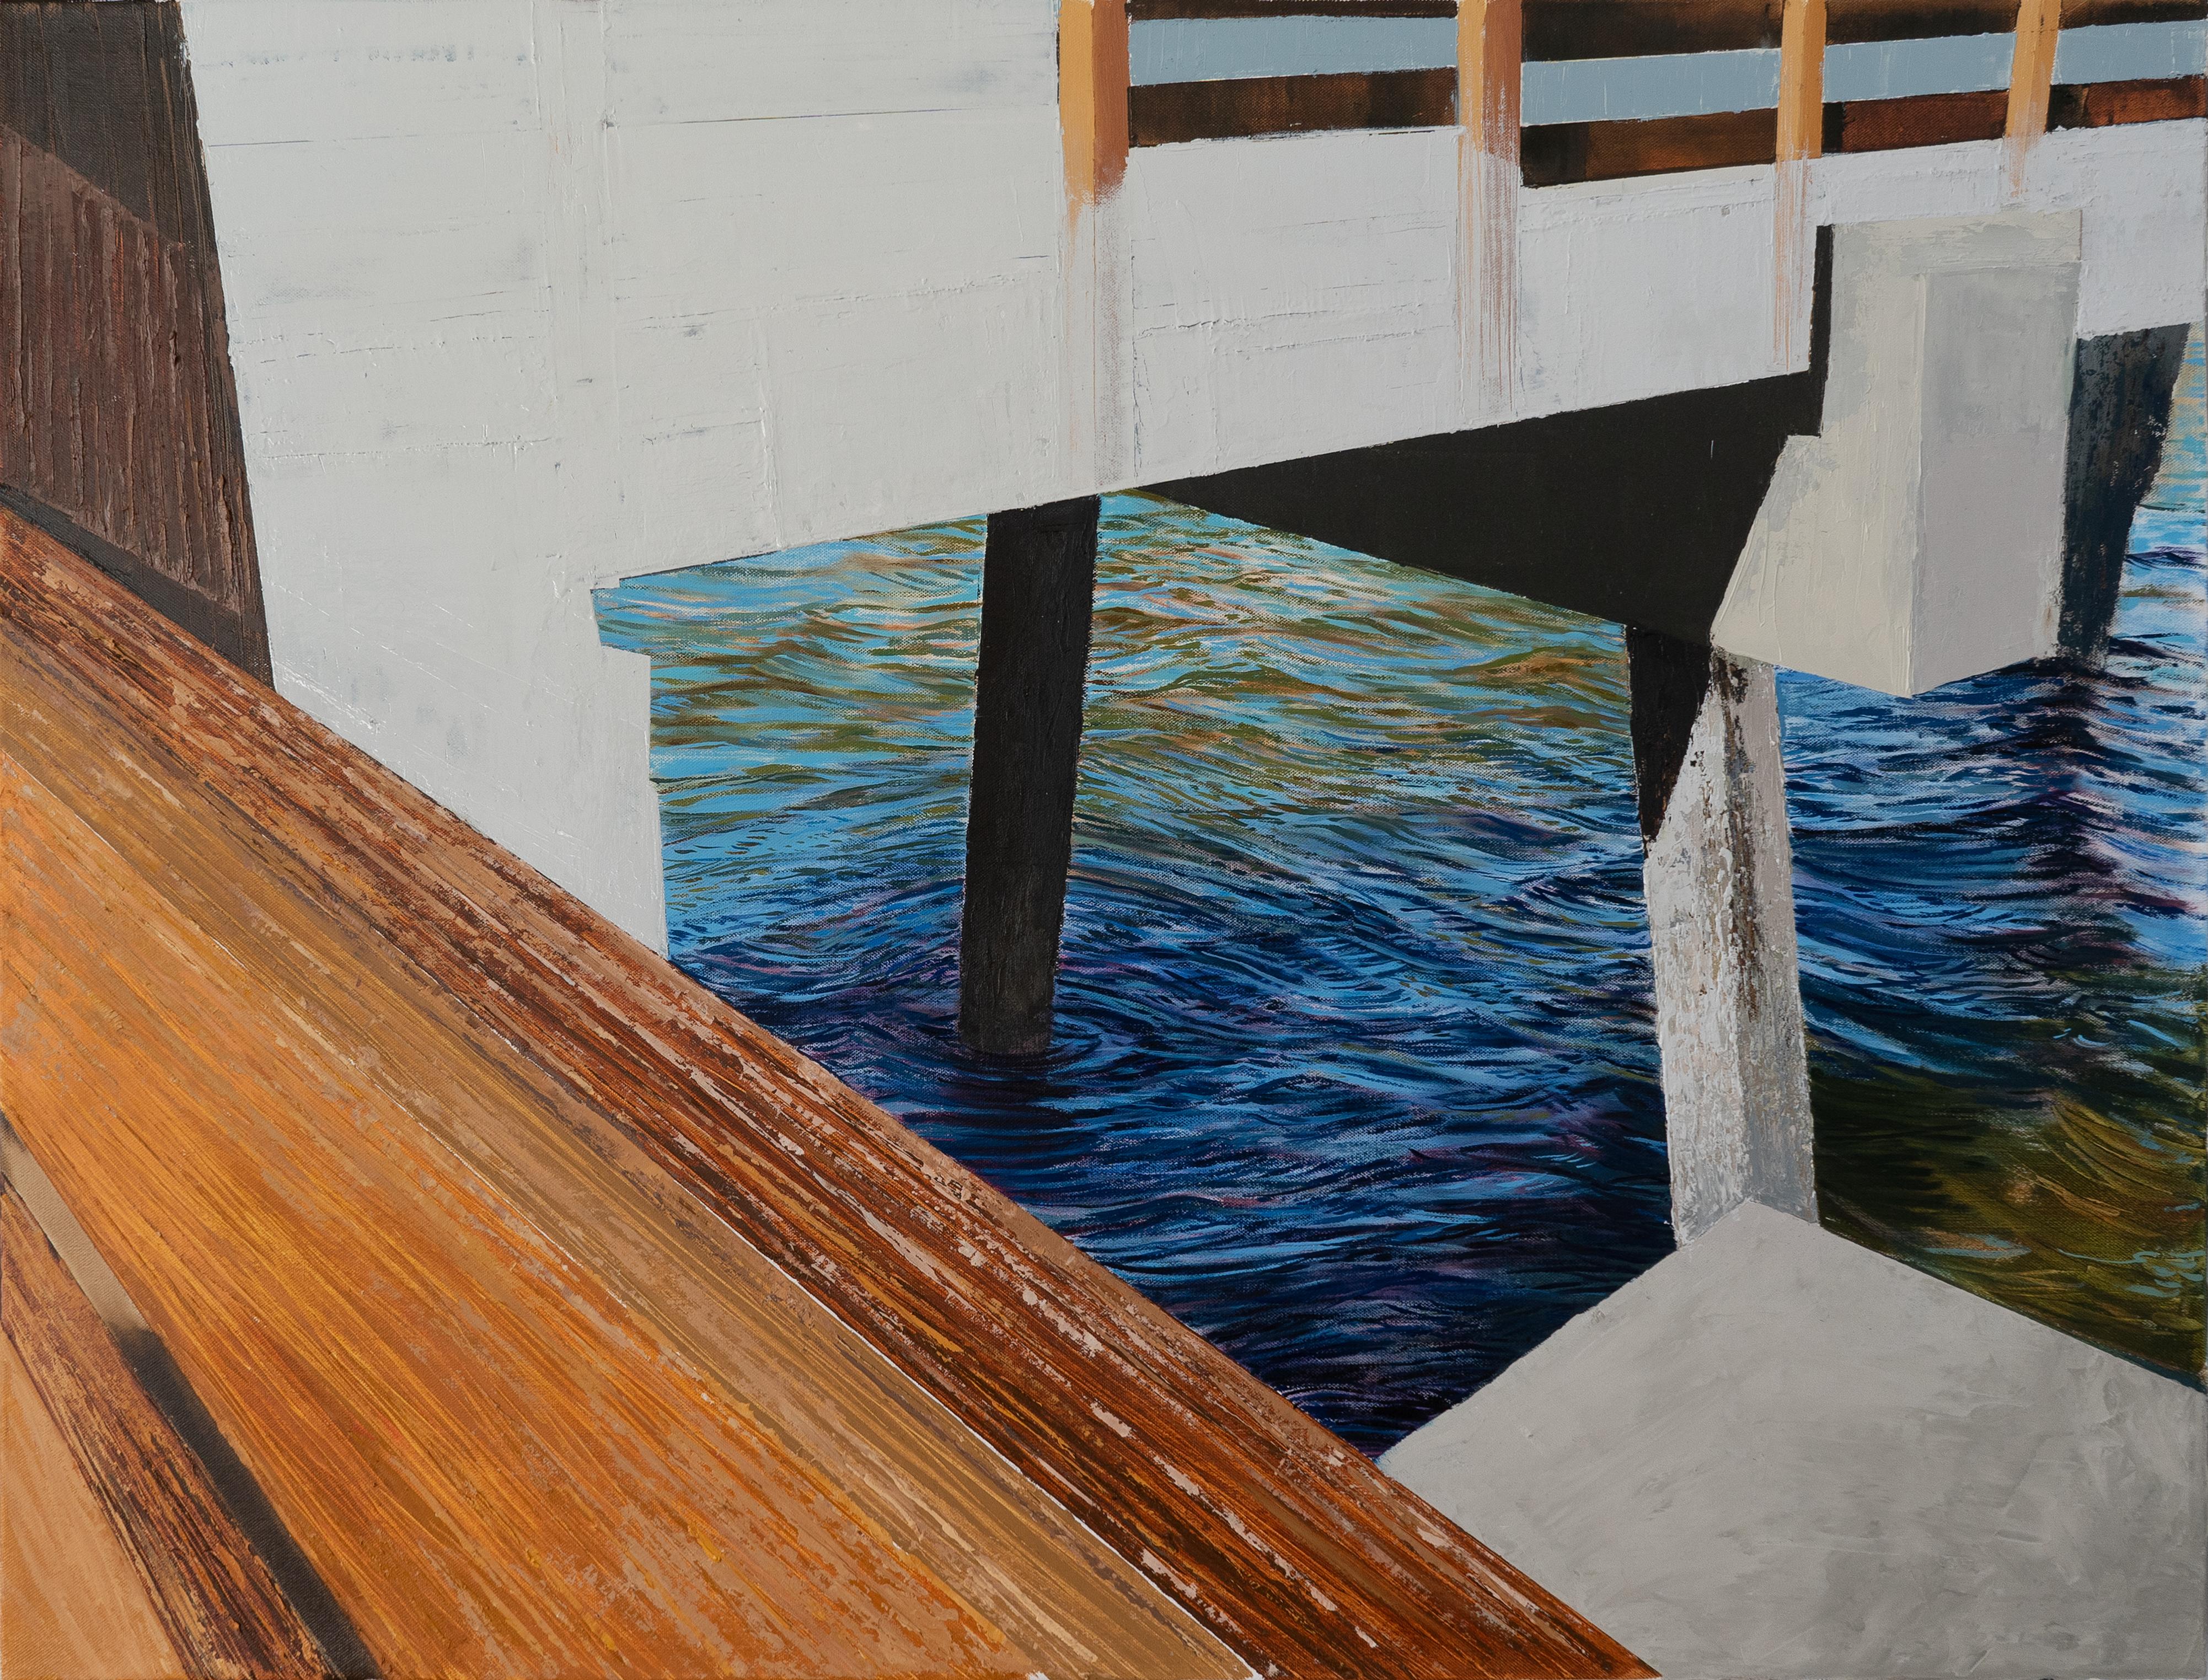 Brooke Lanier Abstract Painting – „This is a Real Place! 2: Großes Gemälde eines Sees oder Flusses mit blauem Wasser und Brücke